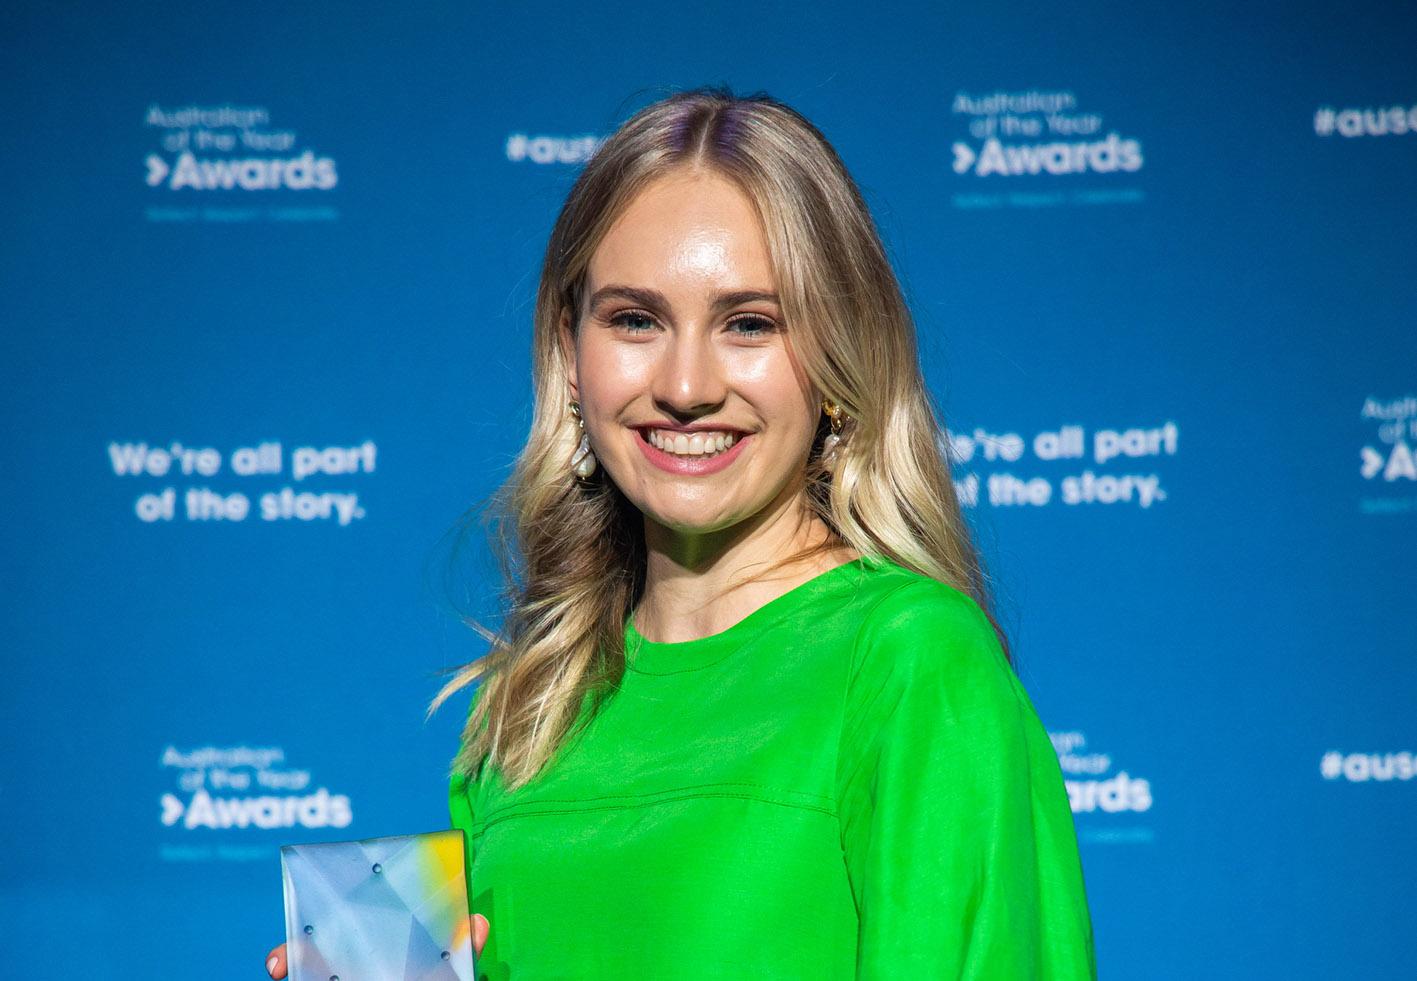 Uni of Adelaide student named Australian of the Year | Newsroom | University of Adelaide